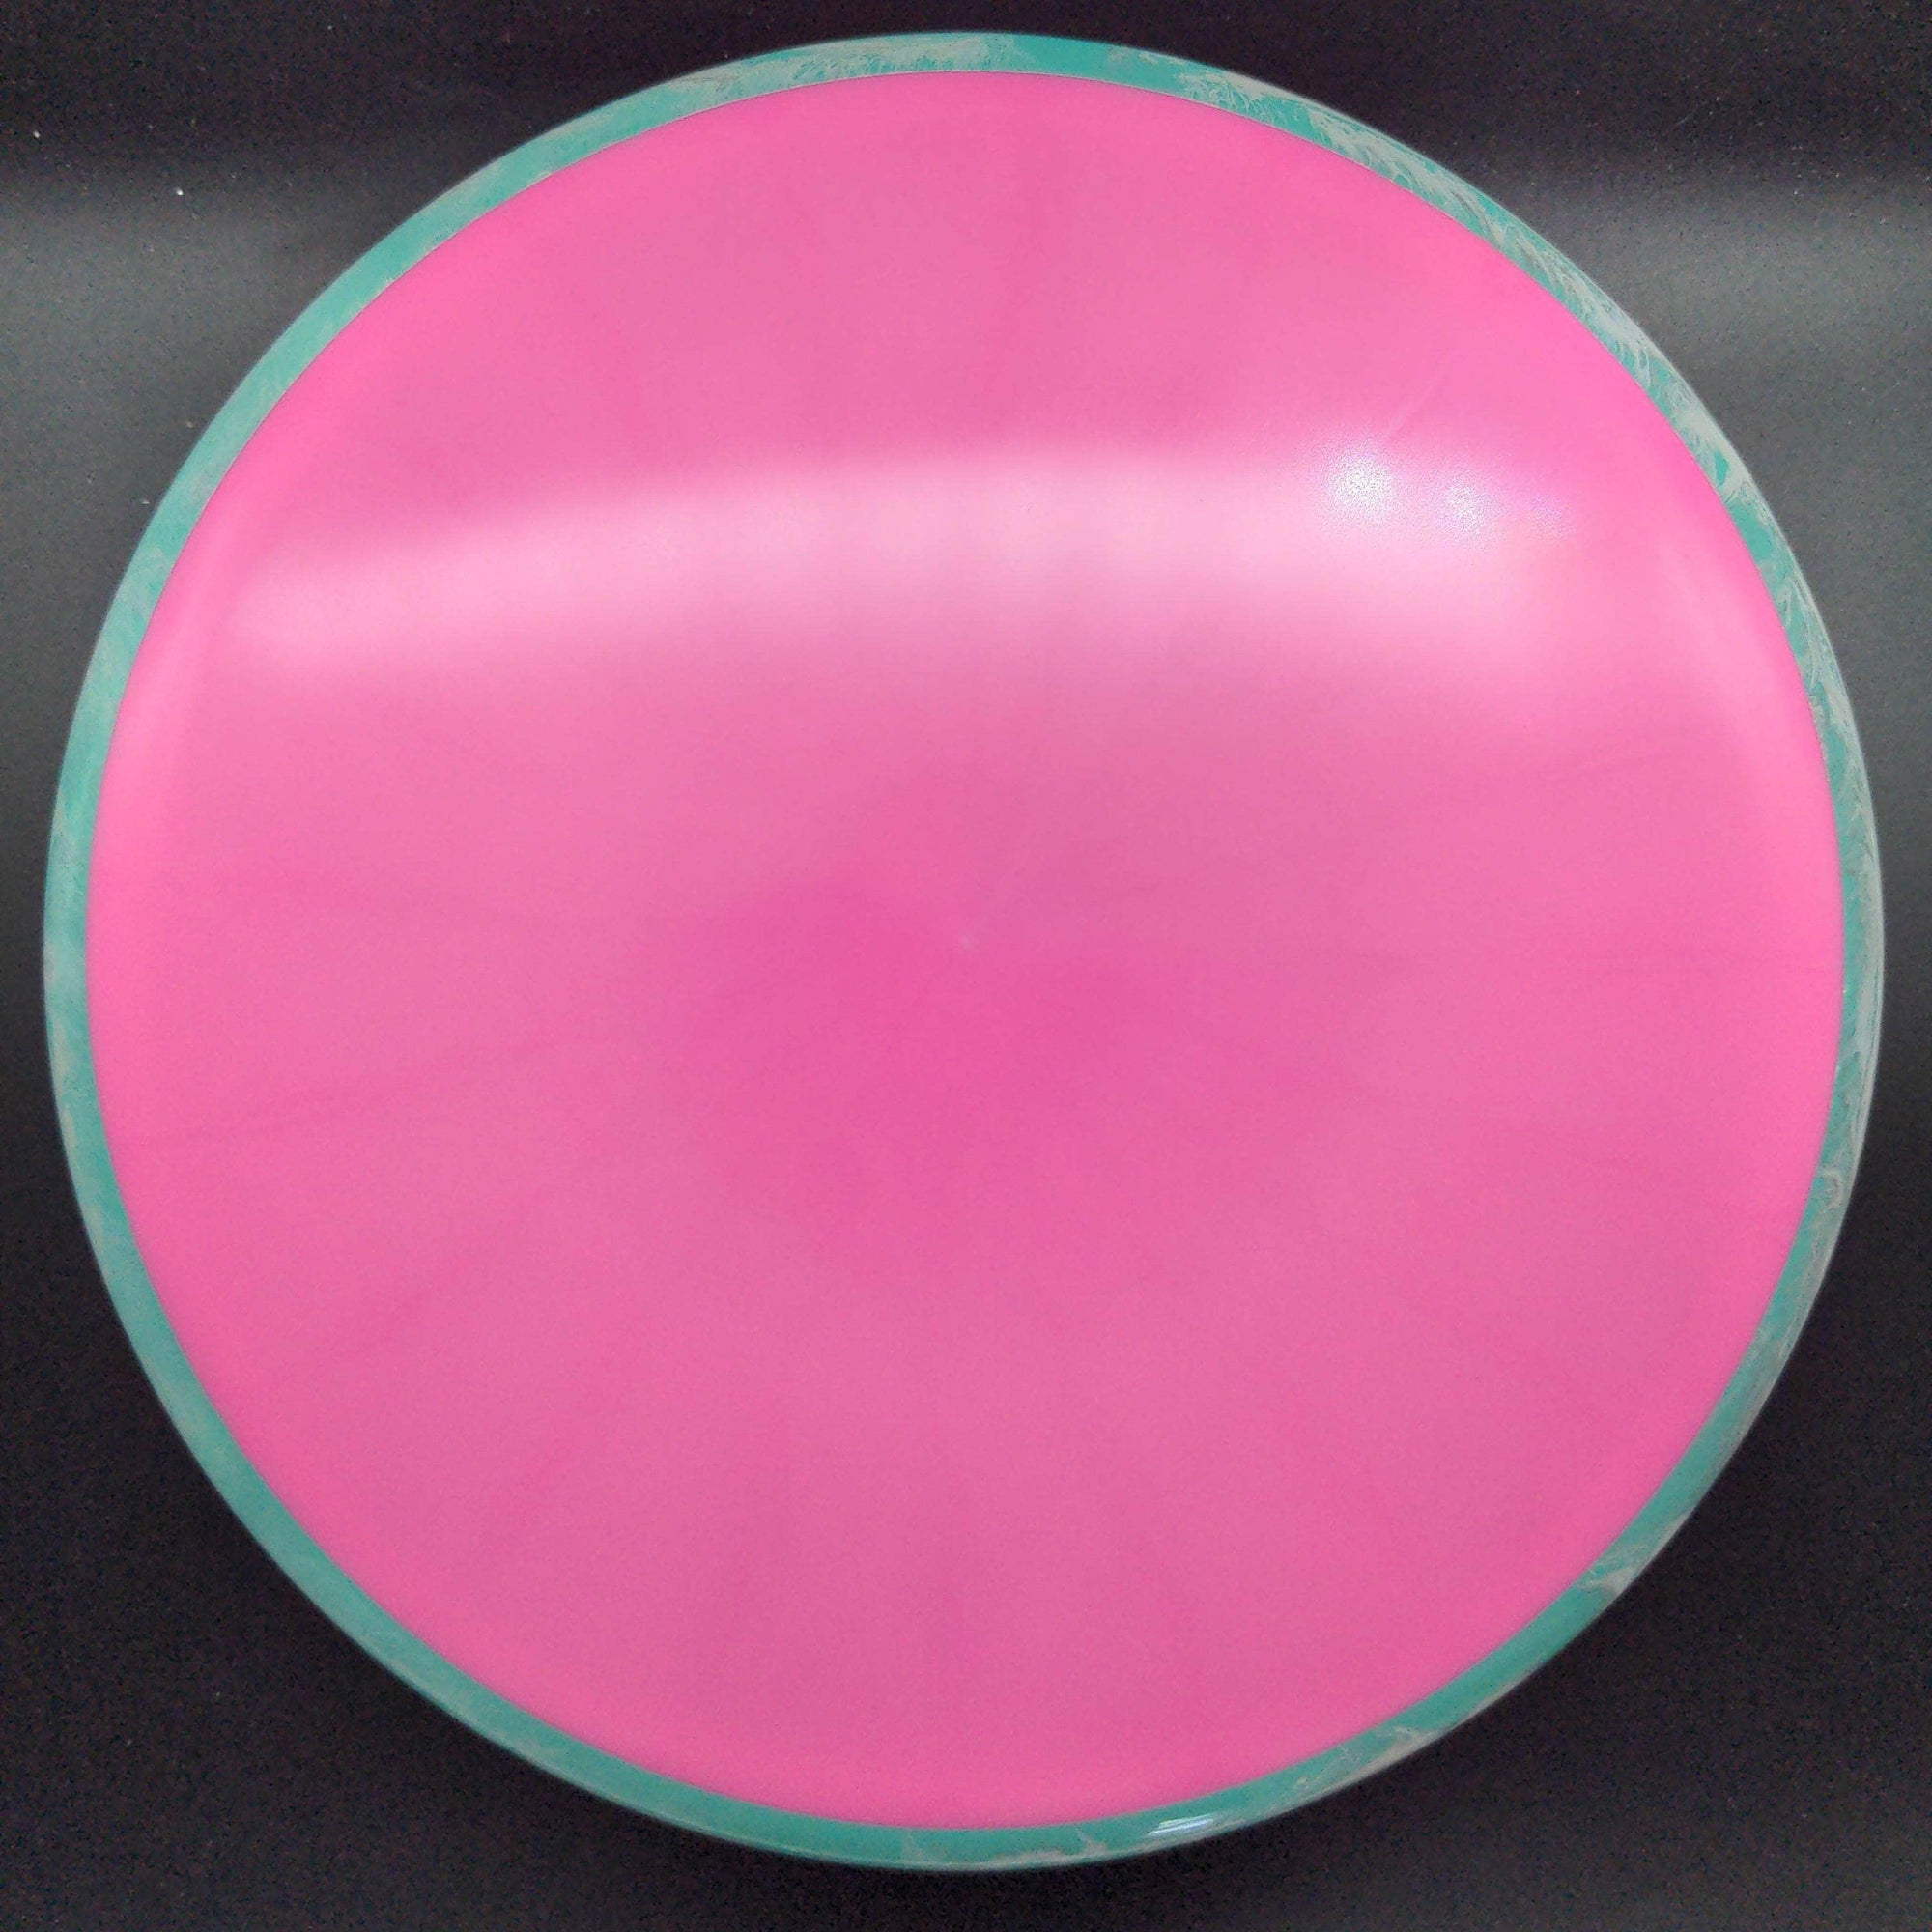 MVP Mid Range Teal Swirl Rim Pink Blank Plate 177 Hex, Fission Plastic,